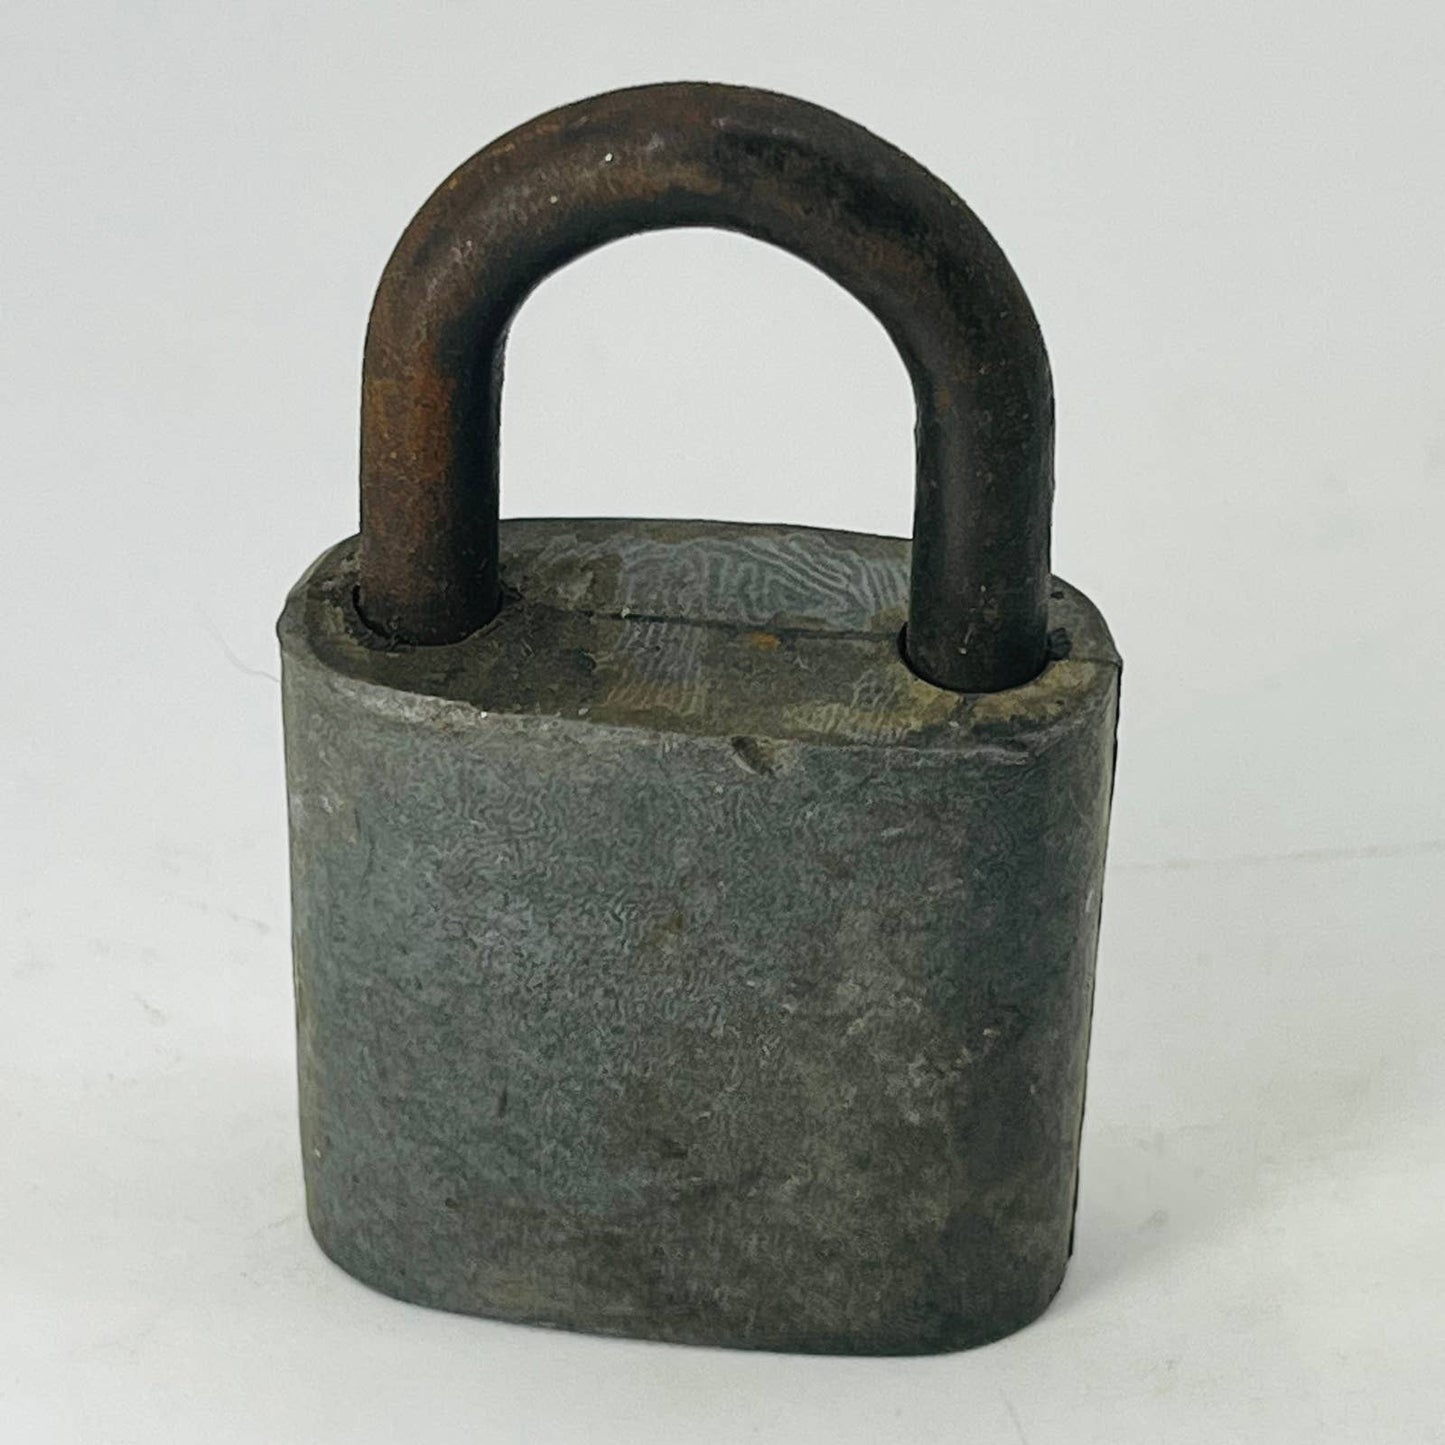 Art Deco Slaymaker Steel Padlock Lock No Key SA8-1